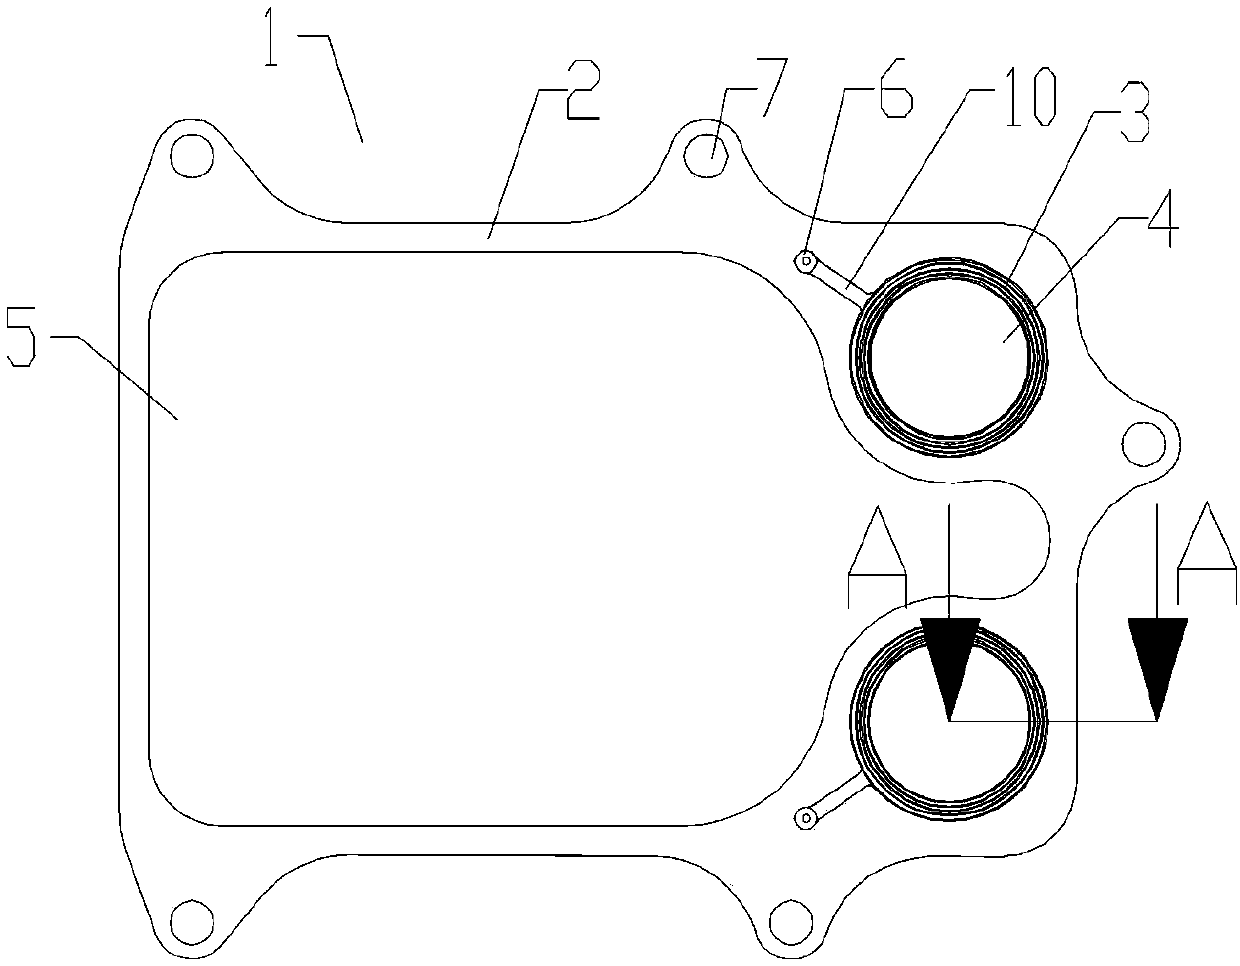 Gasket mechanism of engine oil cooler of engine and engine